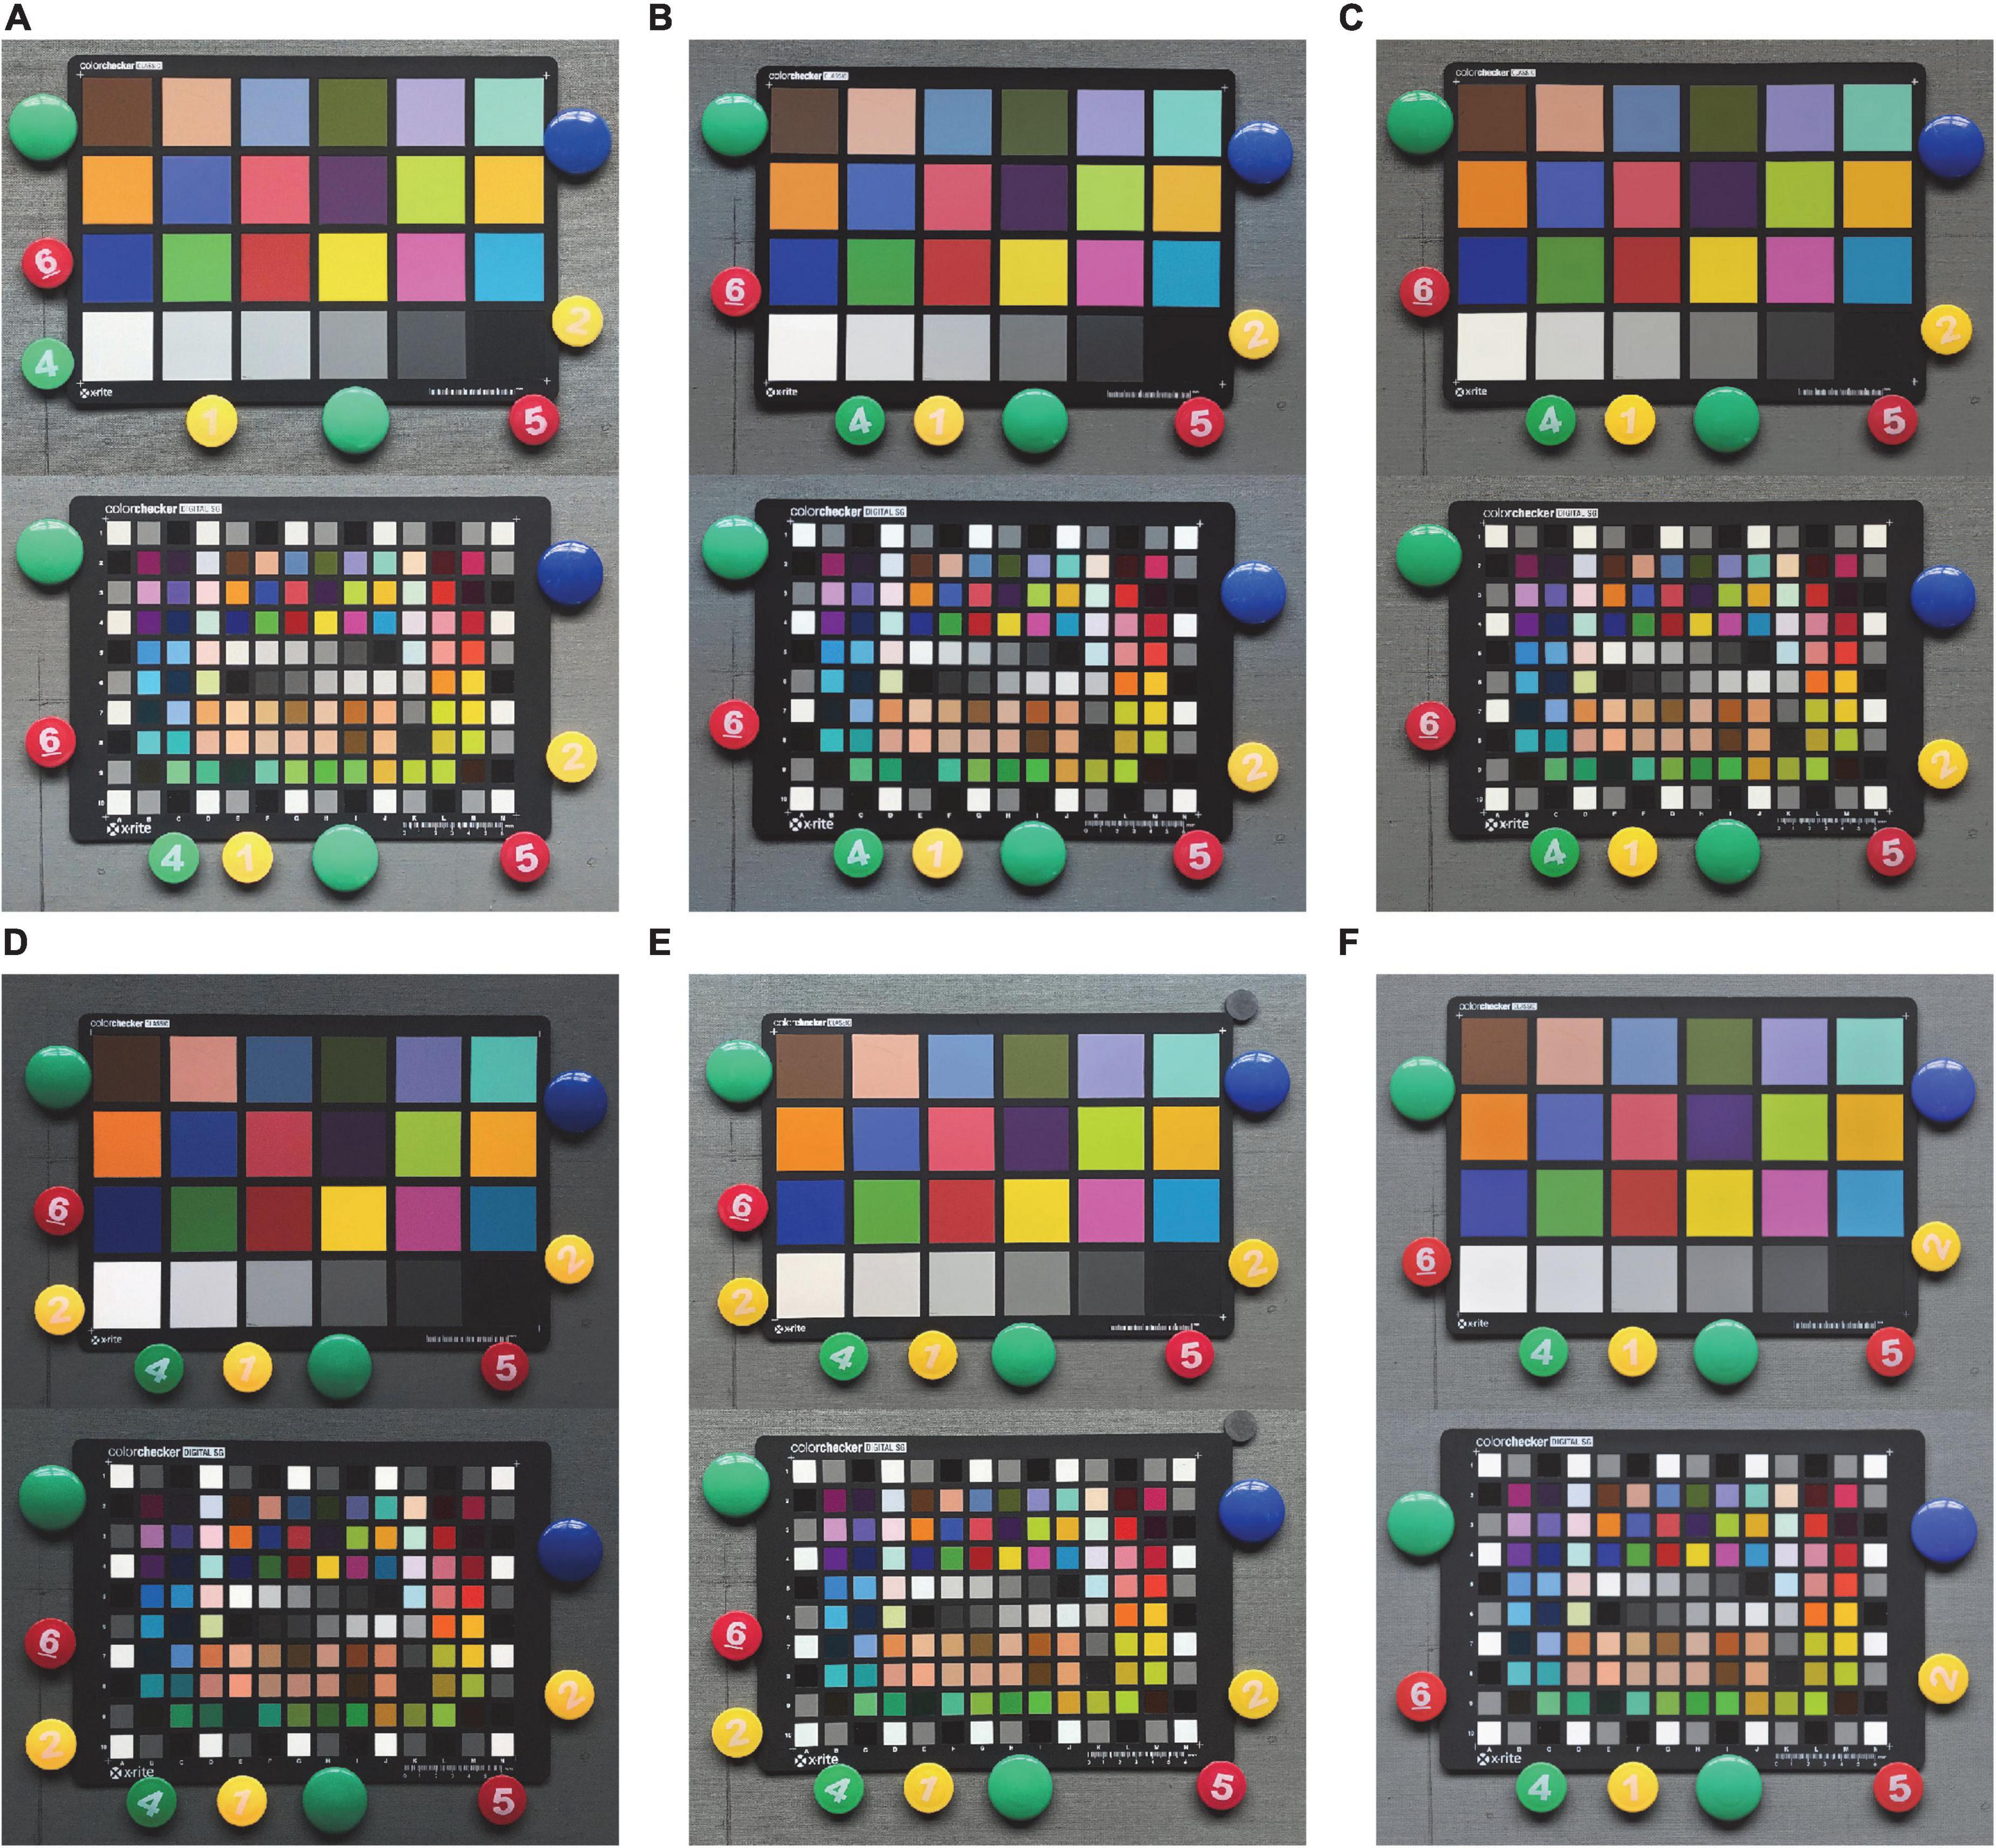 X-Rite Color Checker (CC) Classic array, with CIELab values